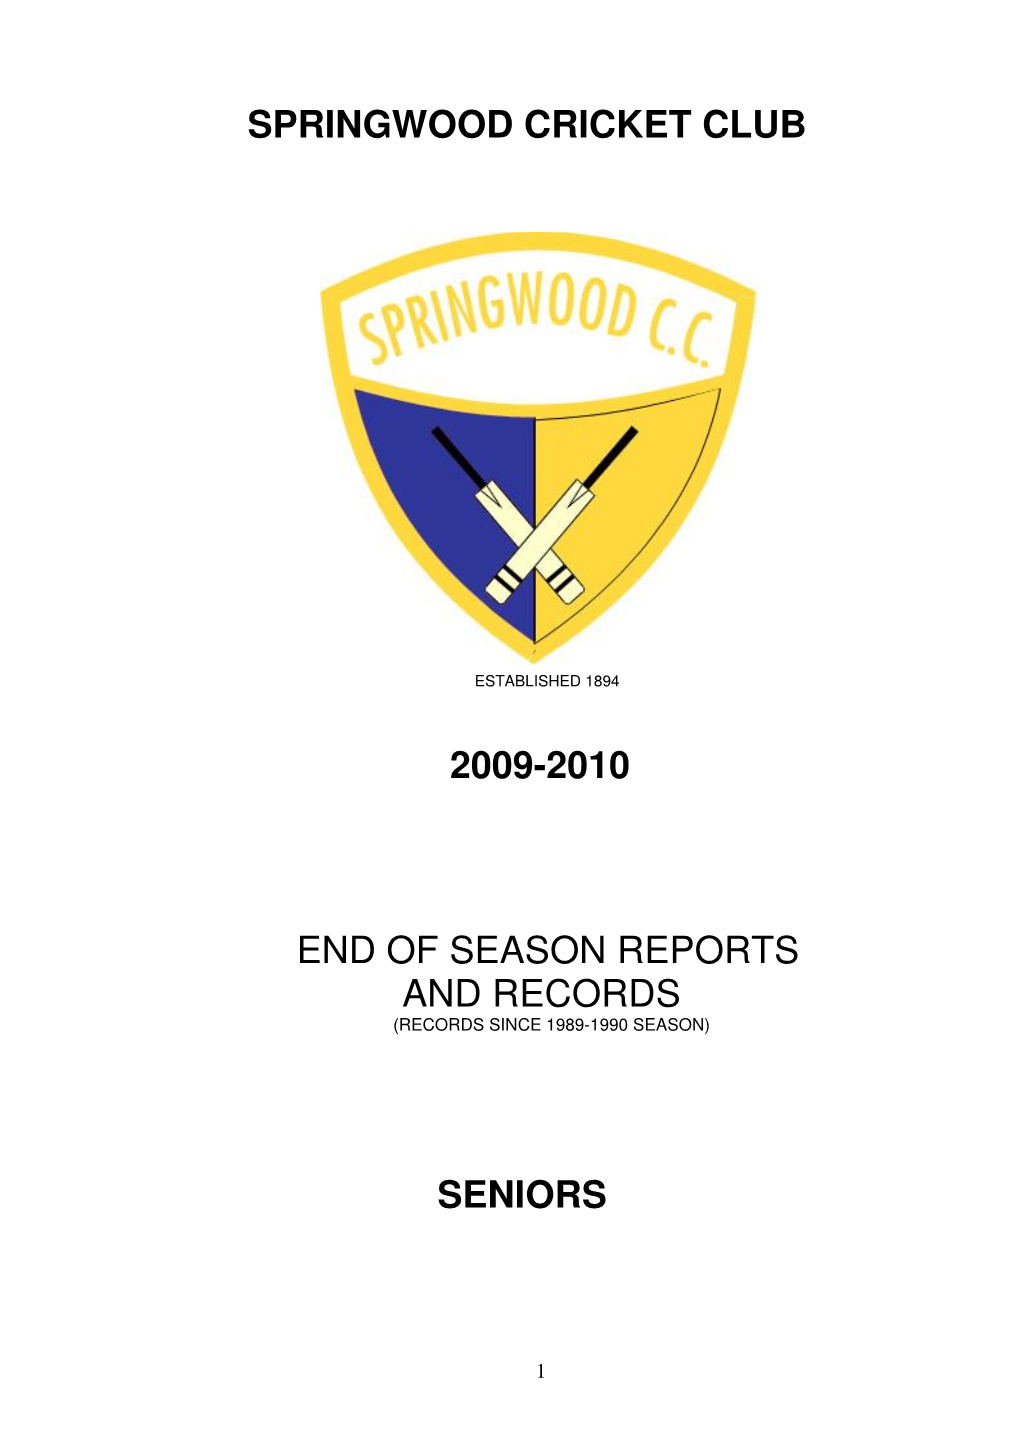 Springwood Cricket Club 2009-2010 End of Season Reports